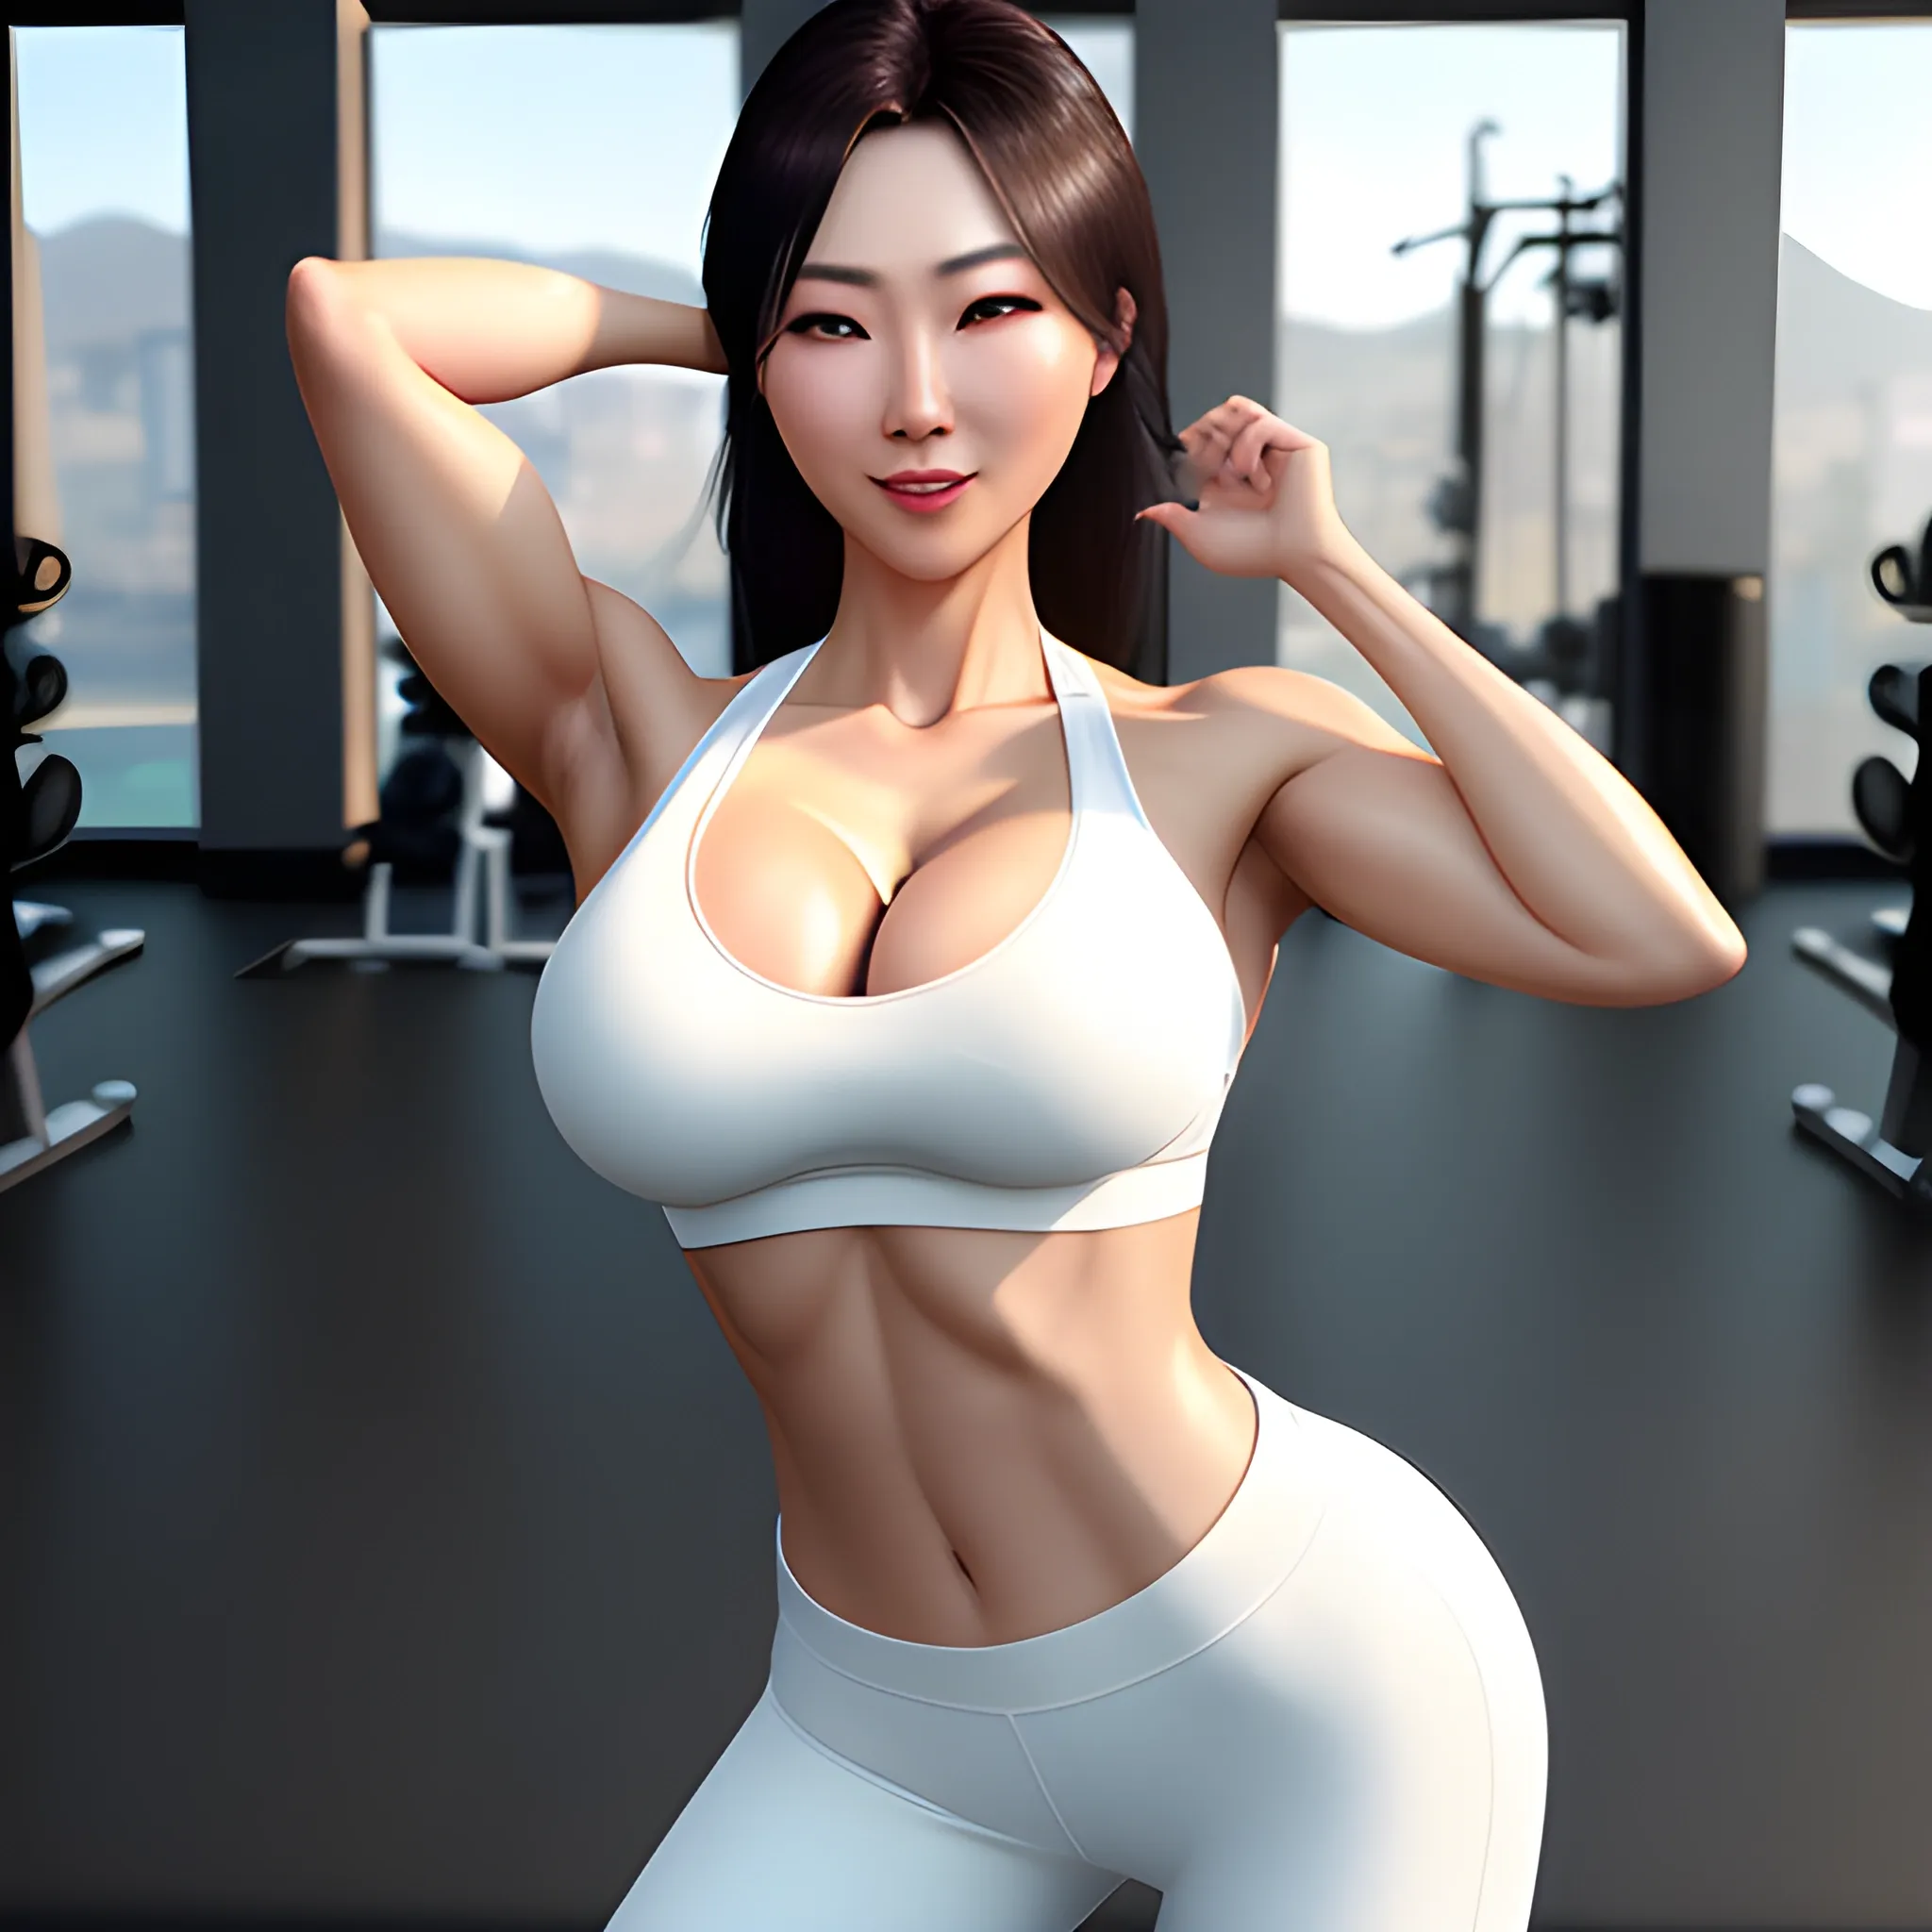 donna lee little share korean big boobs photos